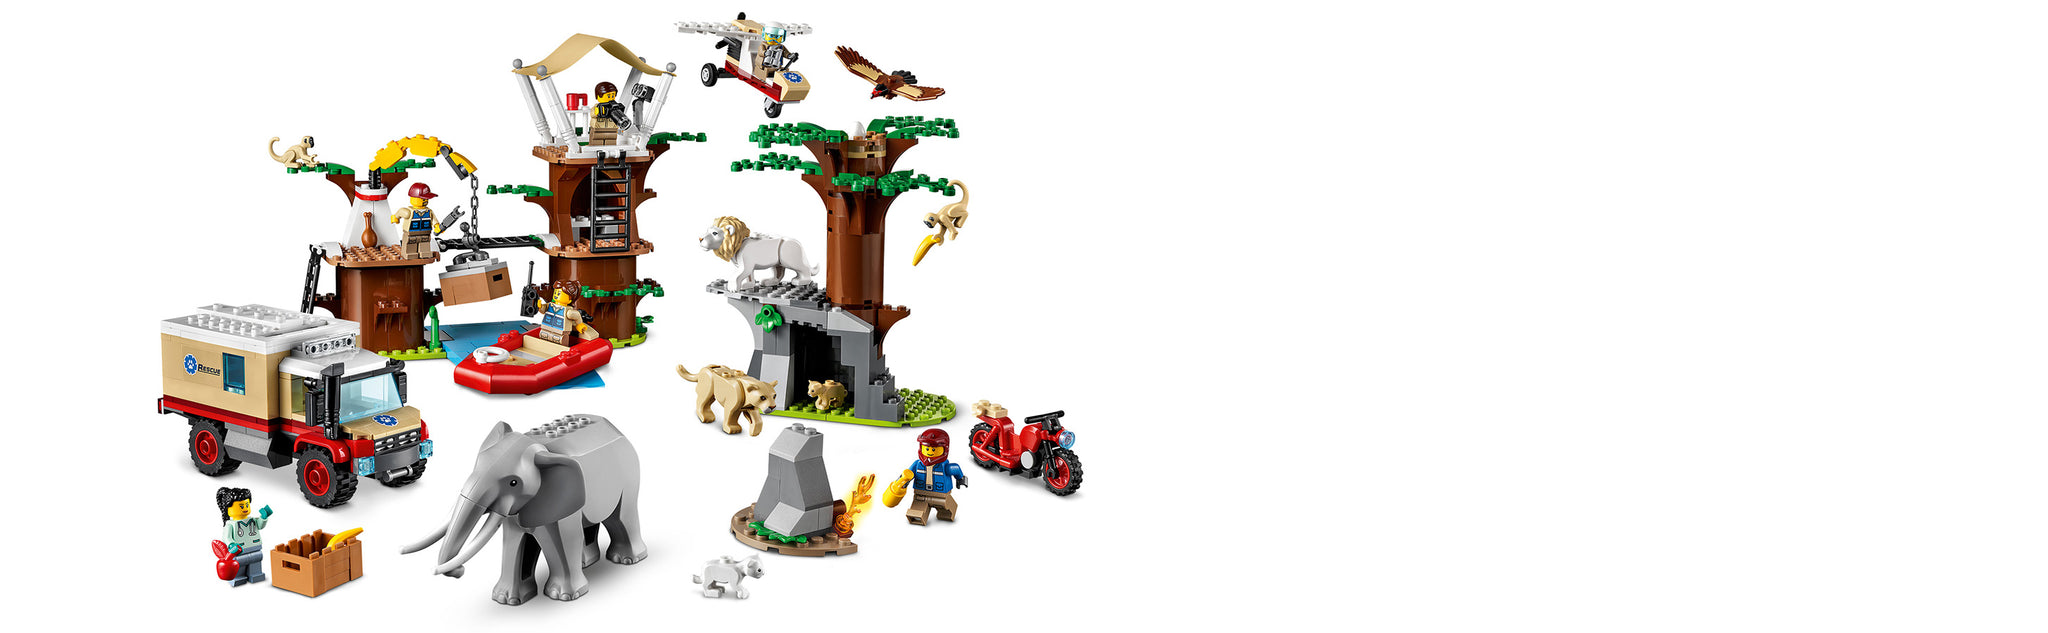 LEGO 60307 Wildlife Redding kamp in de jungle